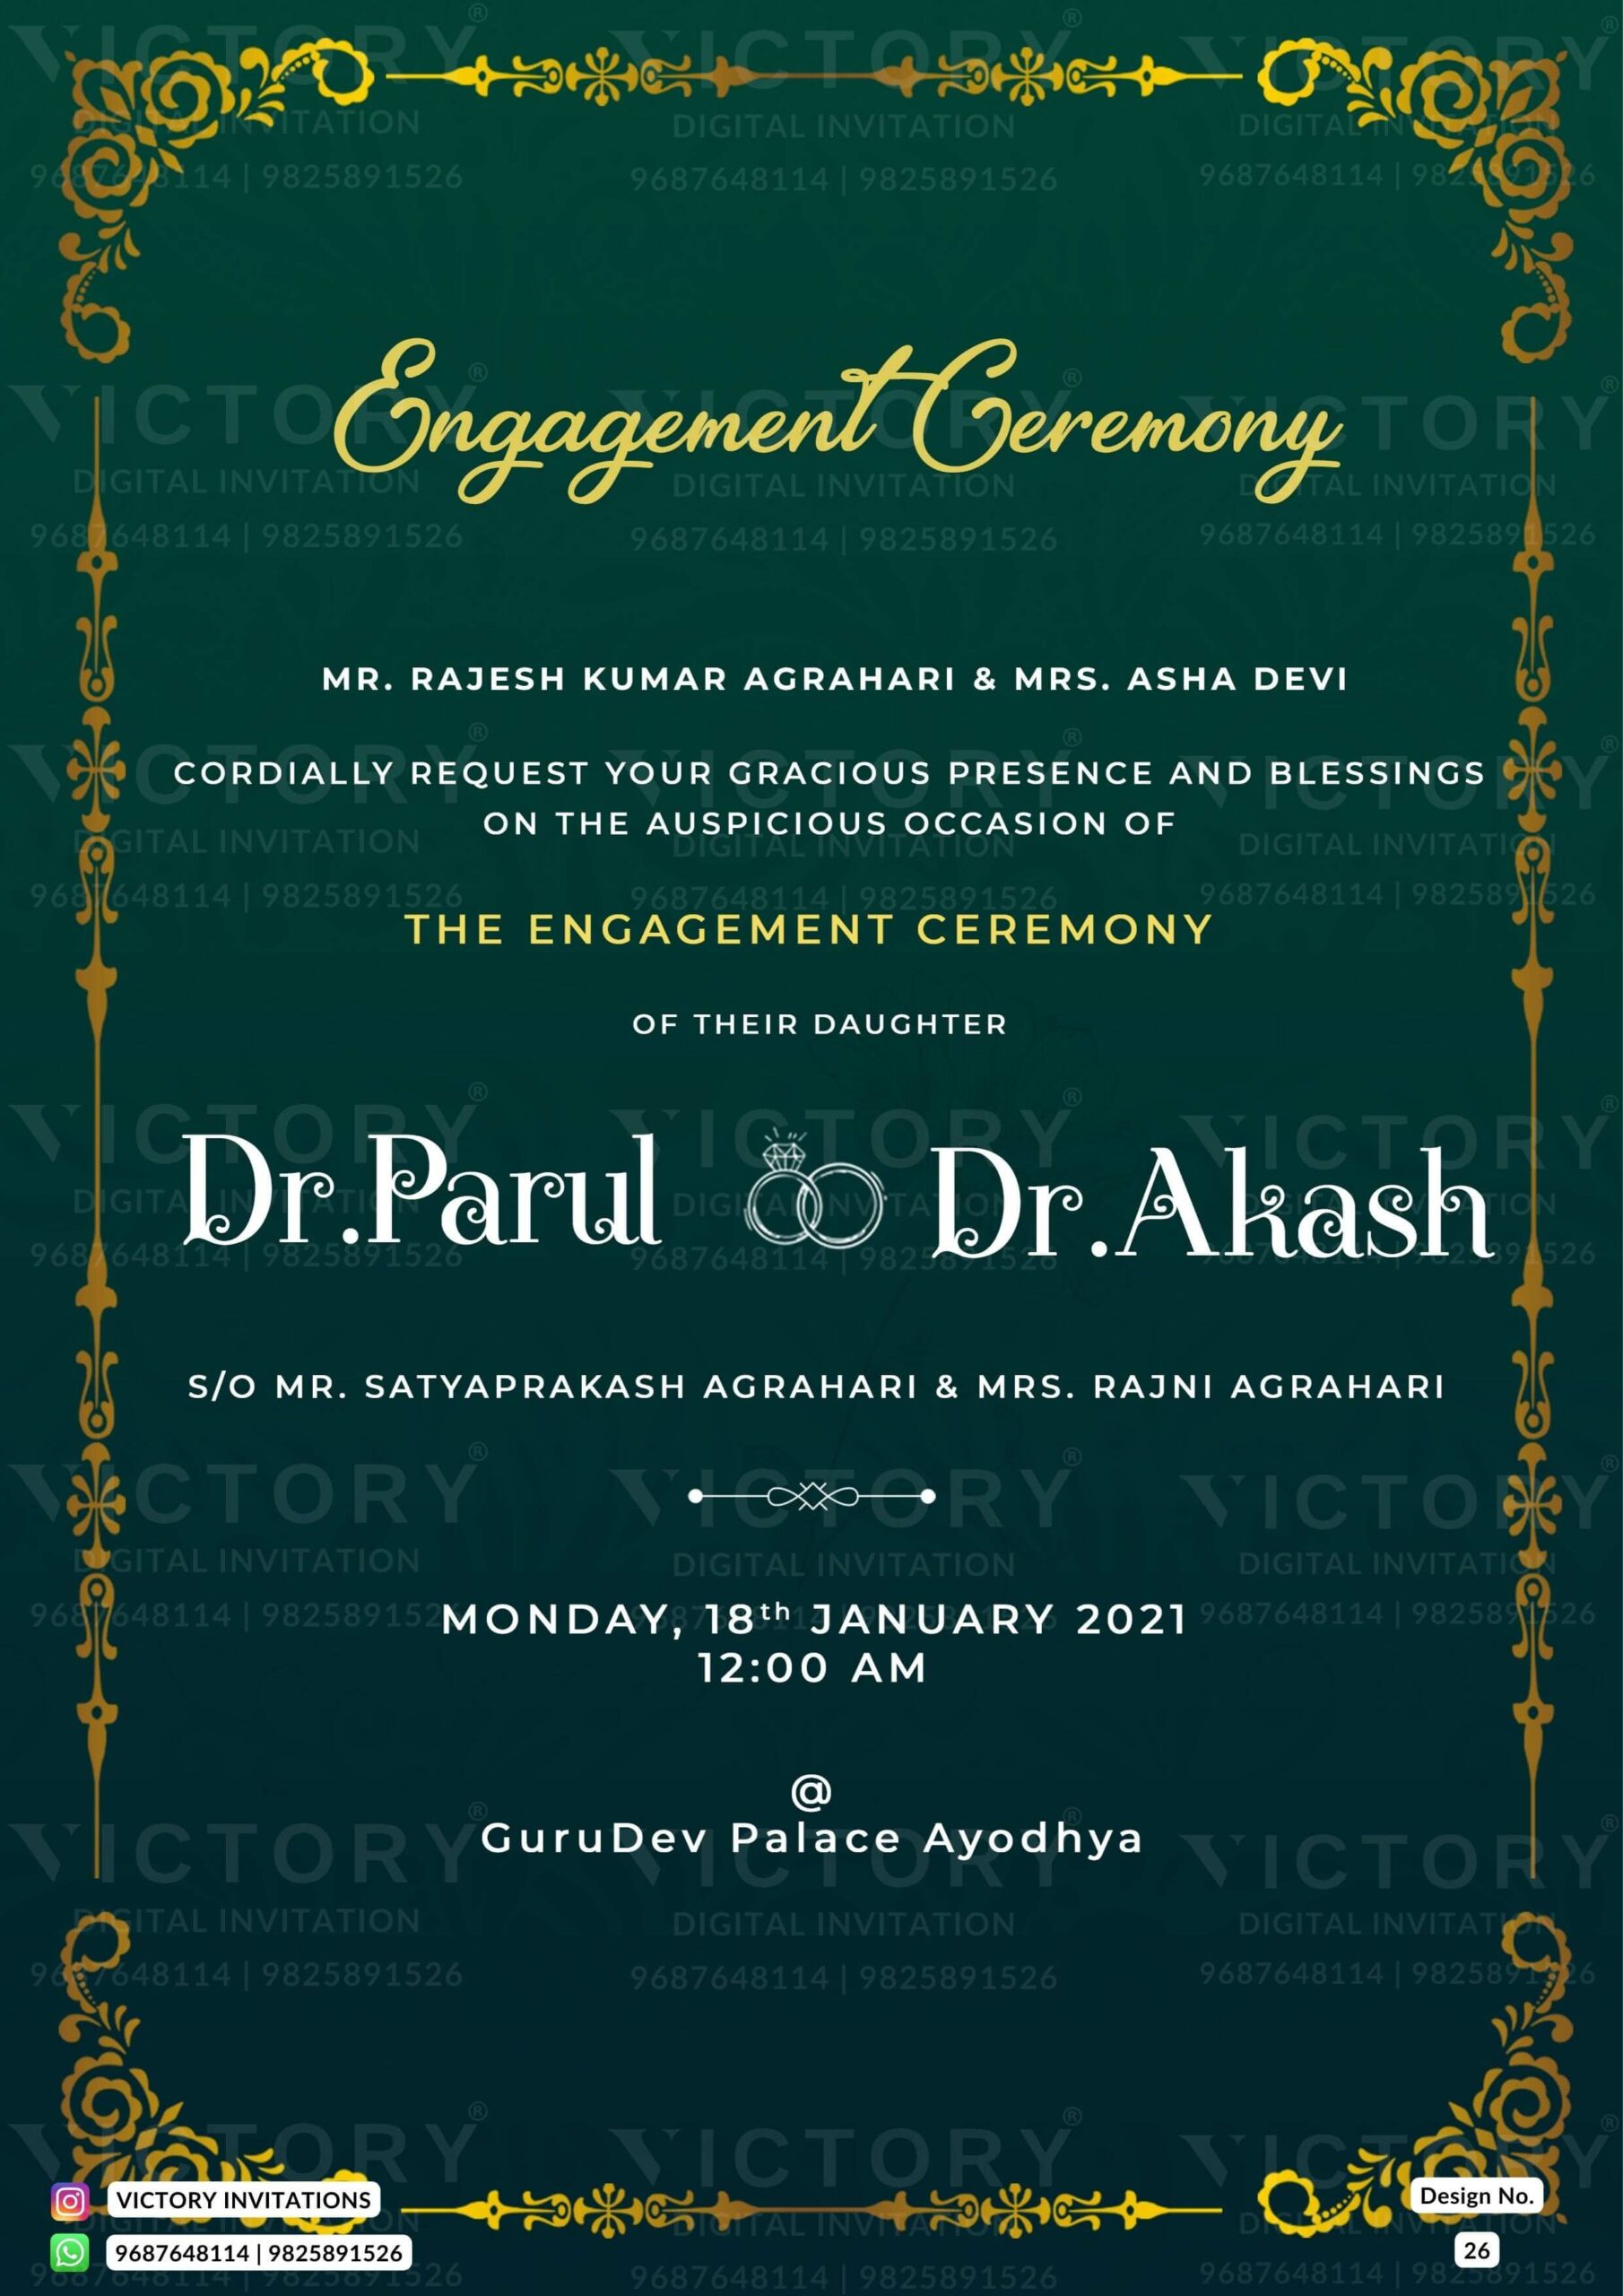 Engagement Invitation in Marathi for WhatsApp - Happy Invites